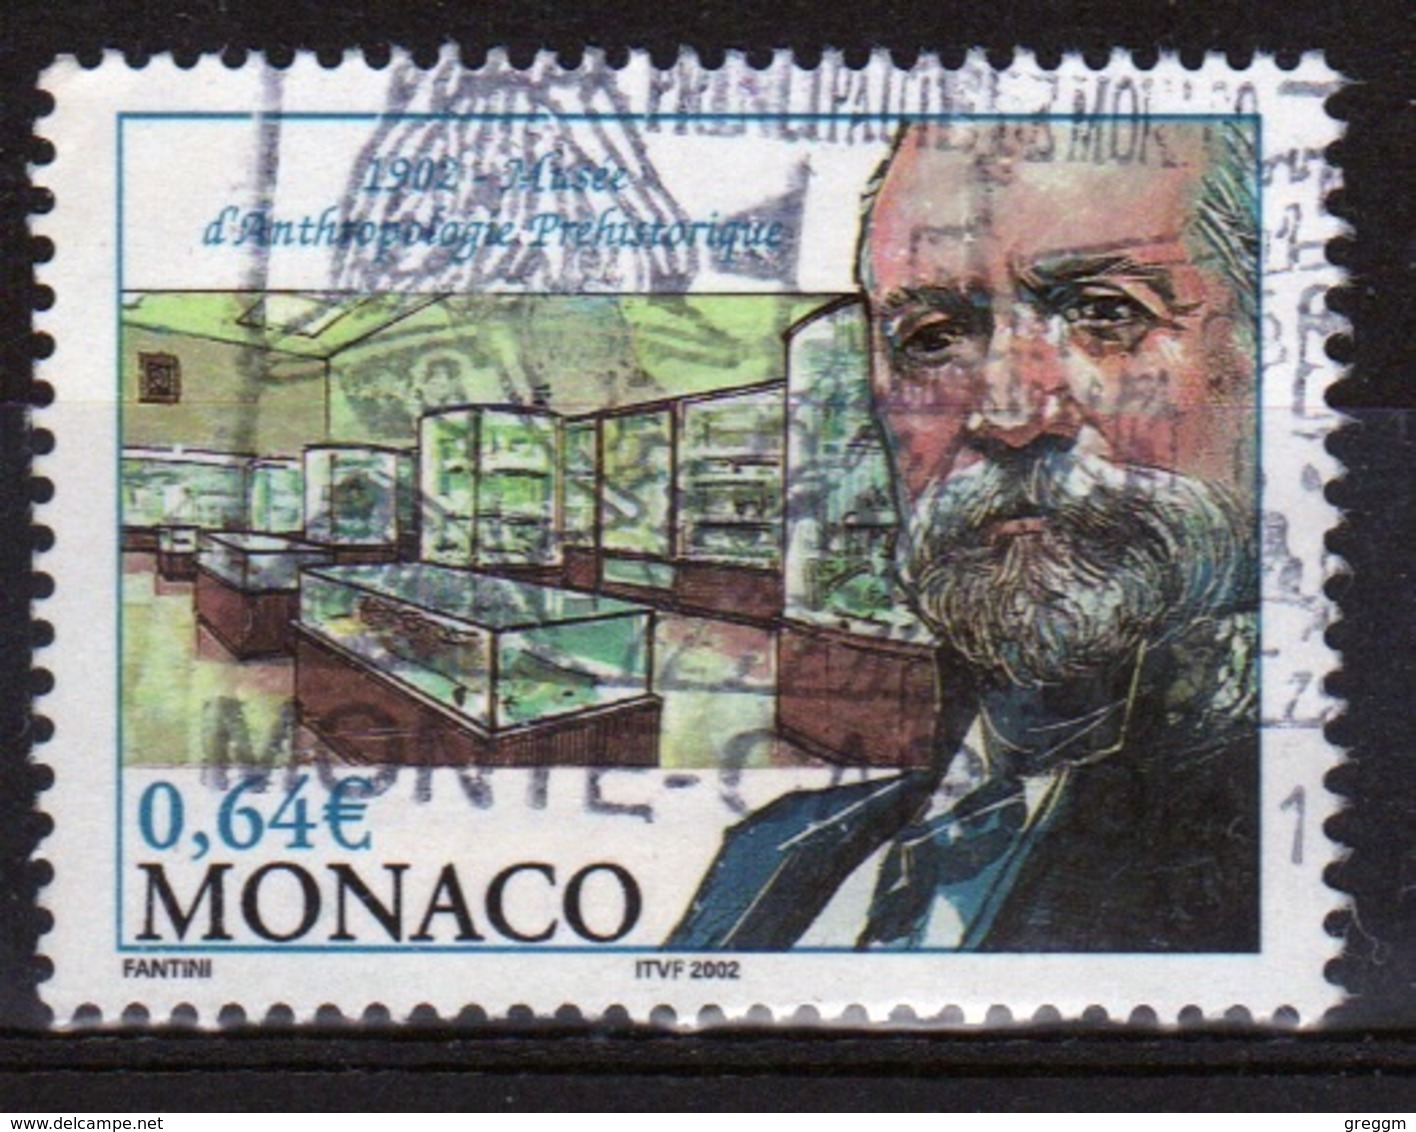 Monaco Single 64c Stamp From 2002 Set To Celebrate Anniversaries. - Gebruikt